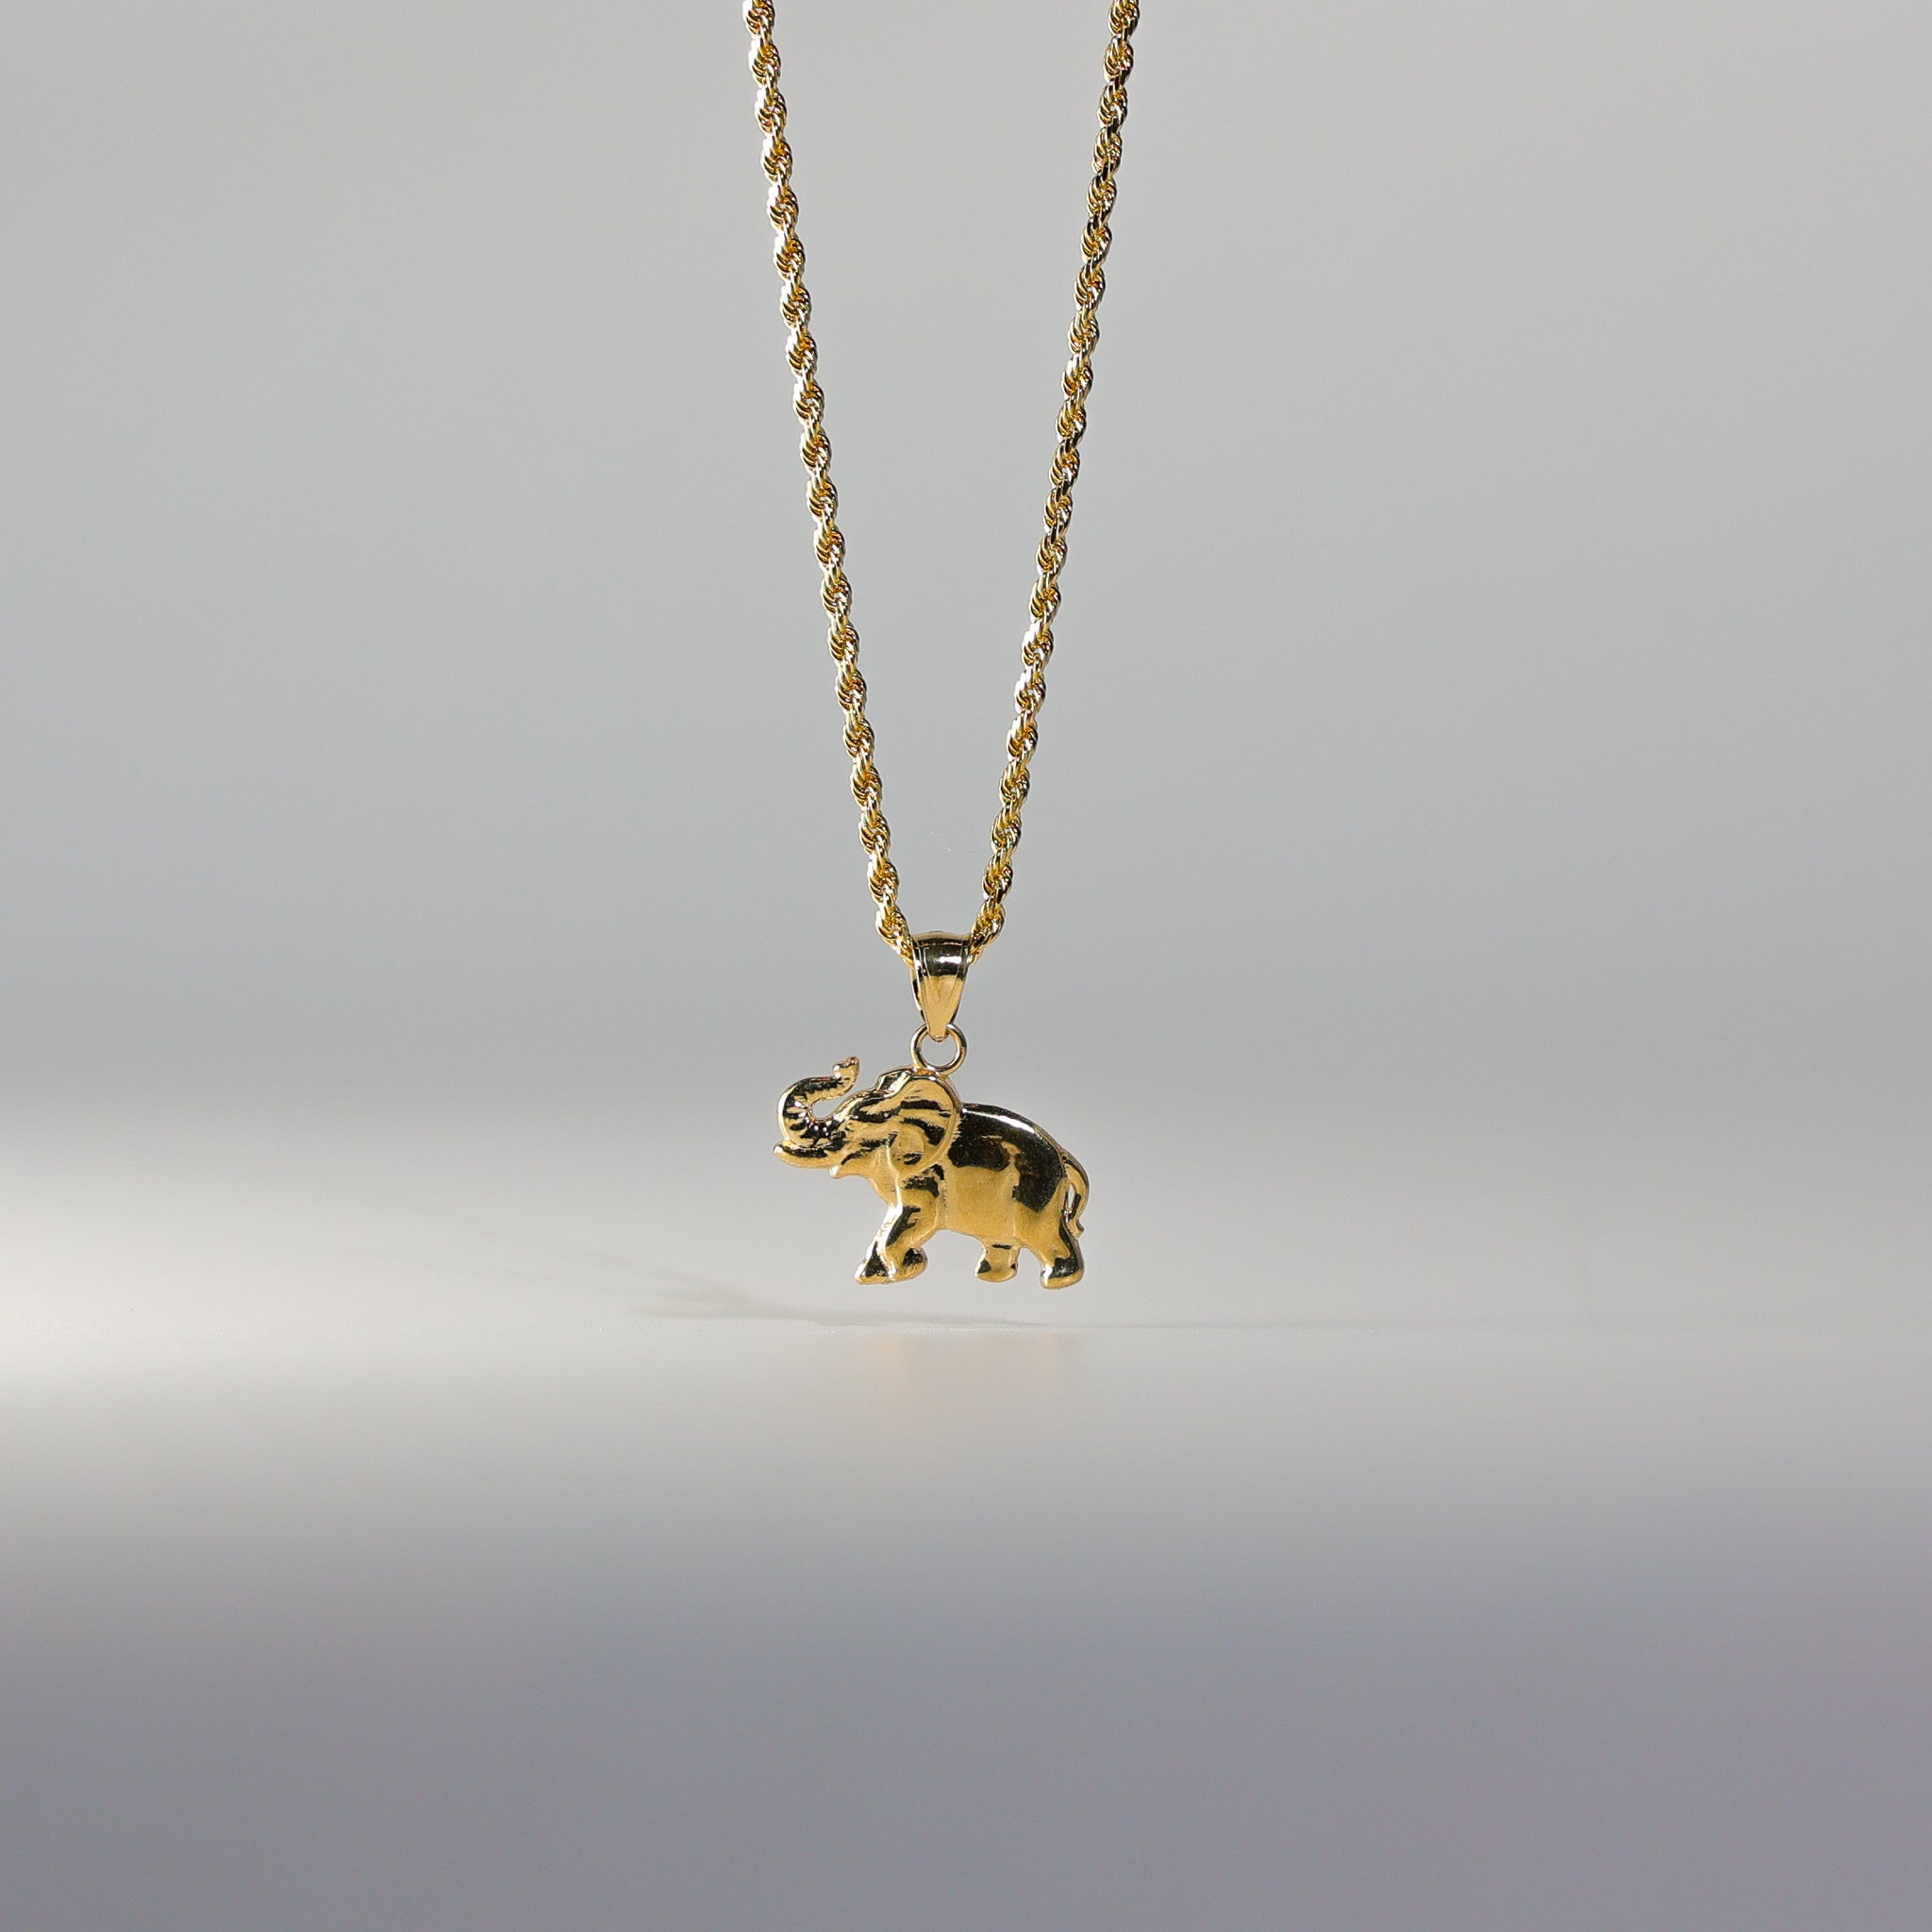 Gold Dainty Elephant Charm Model-1627 - Charlie & Co. Jewelry